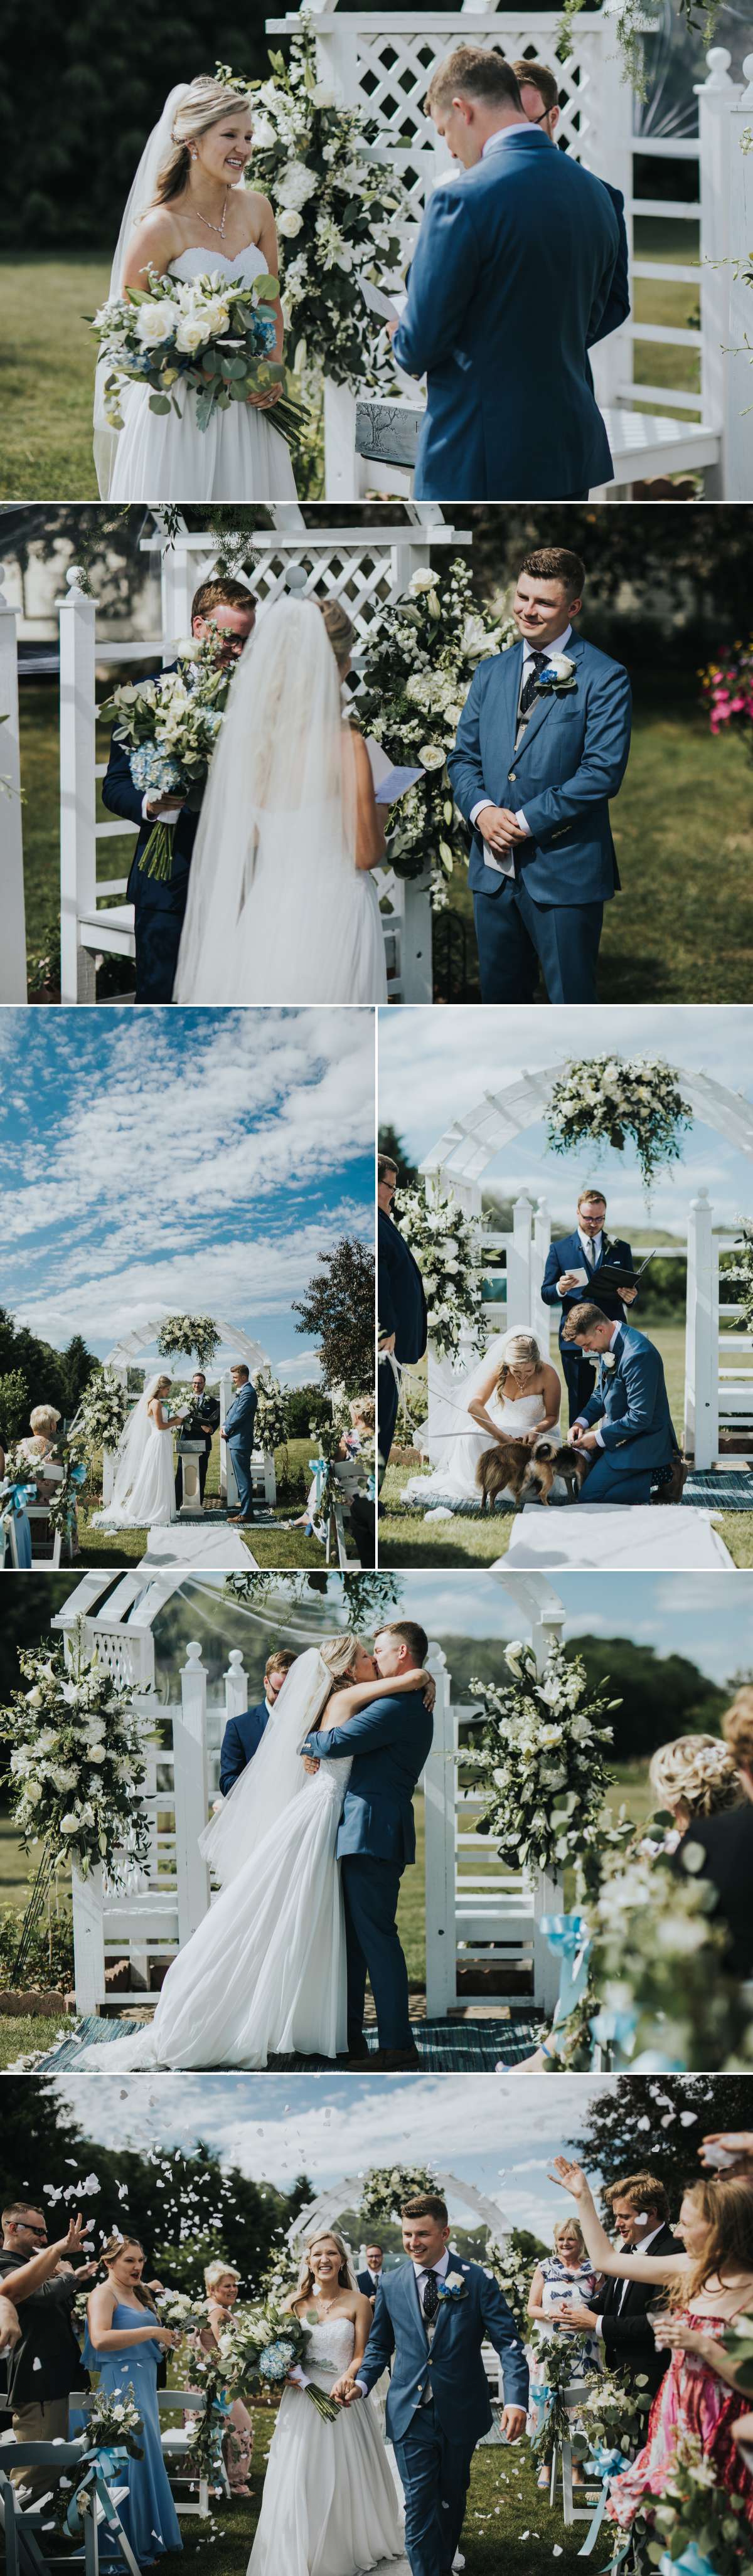 Minnesota Backyard Wedding Photography | Megan + Weston 6